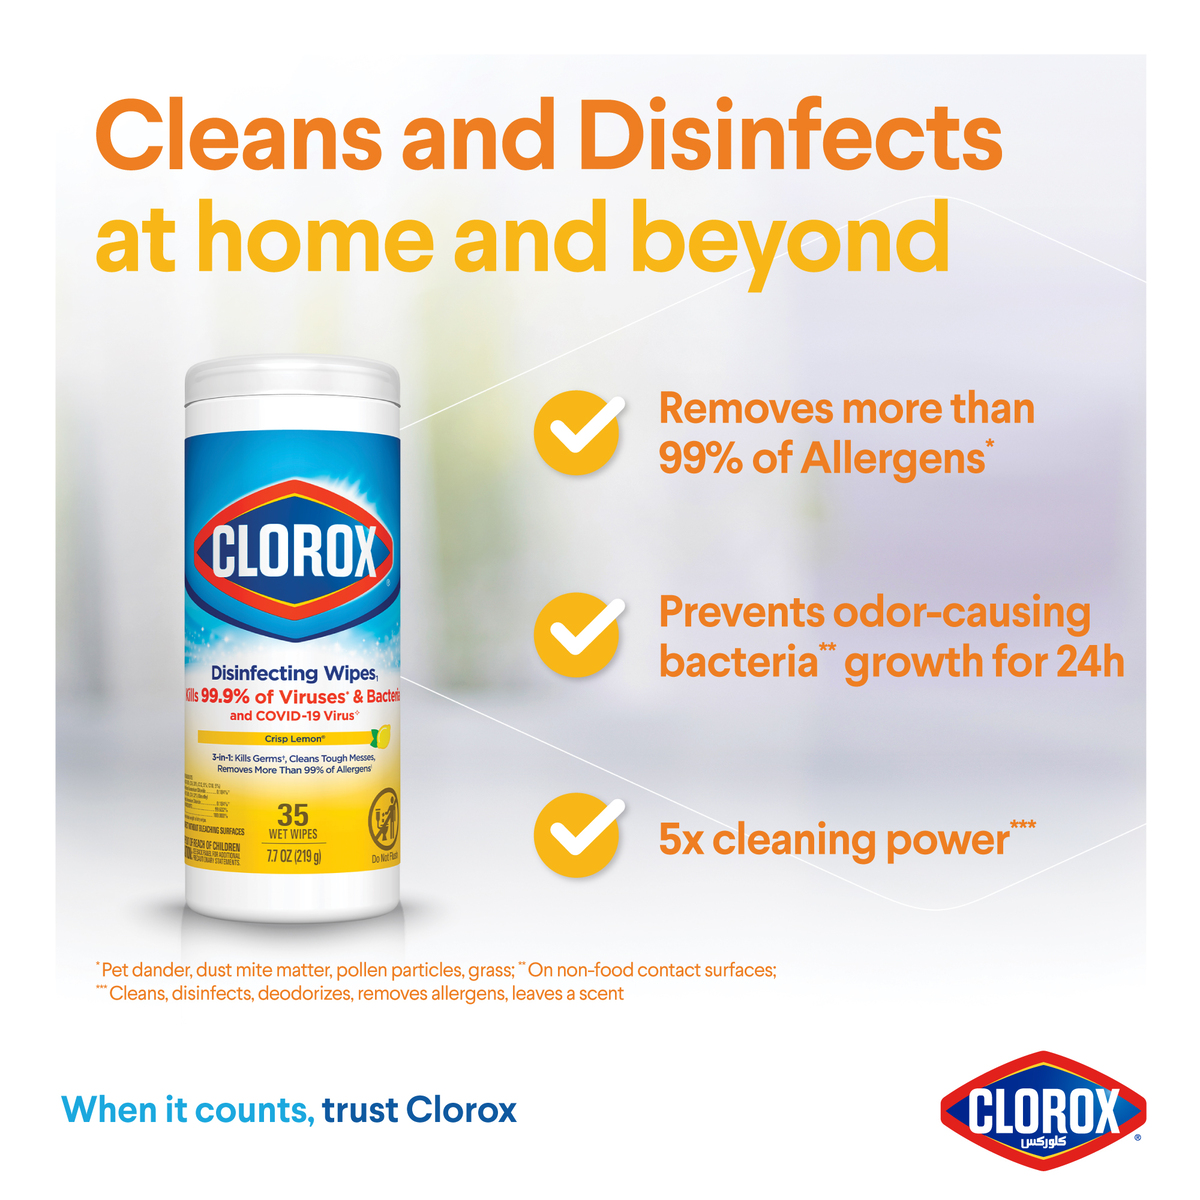 Clorox Disinfecting Wet Wipes Crisp Lemon 35 pcs